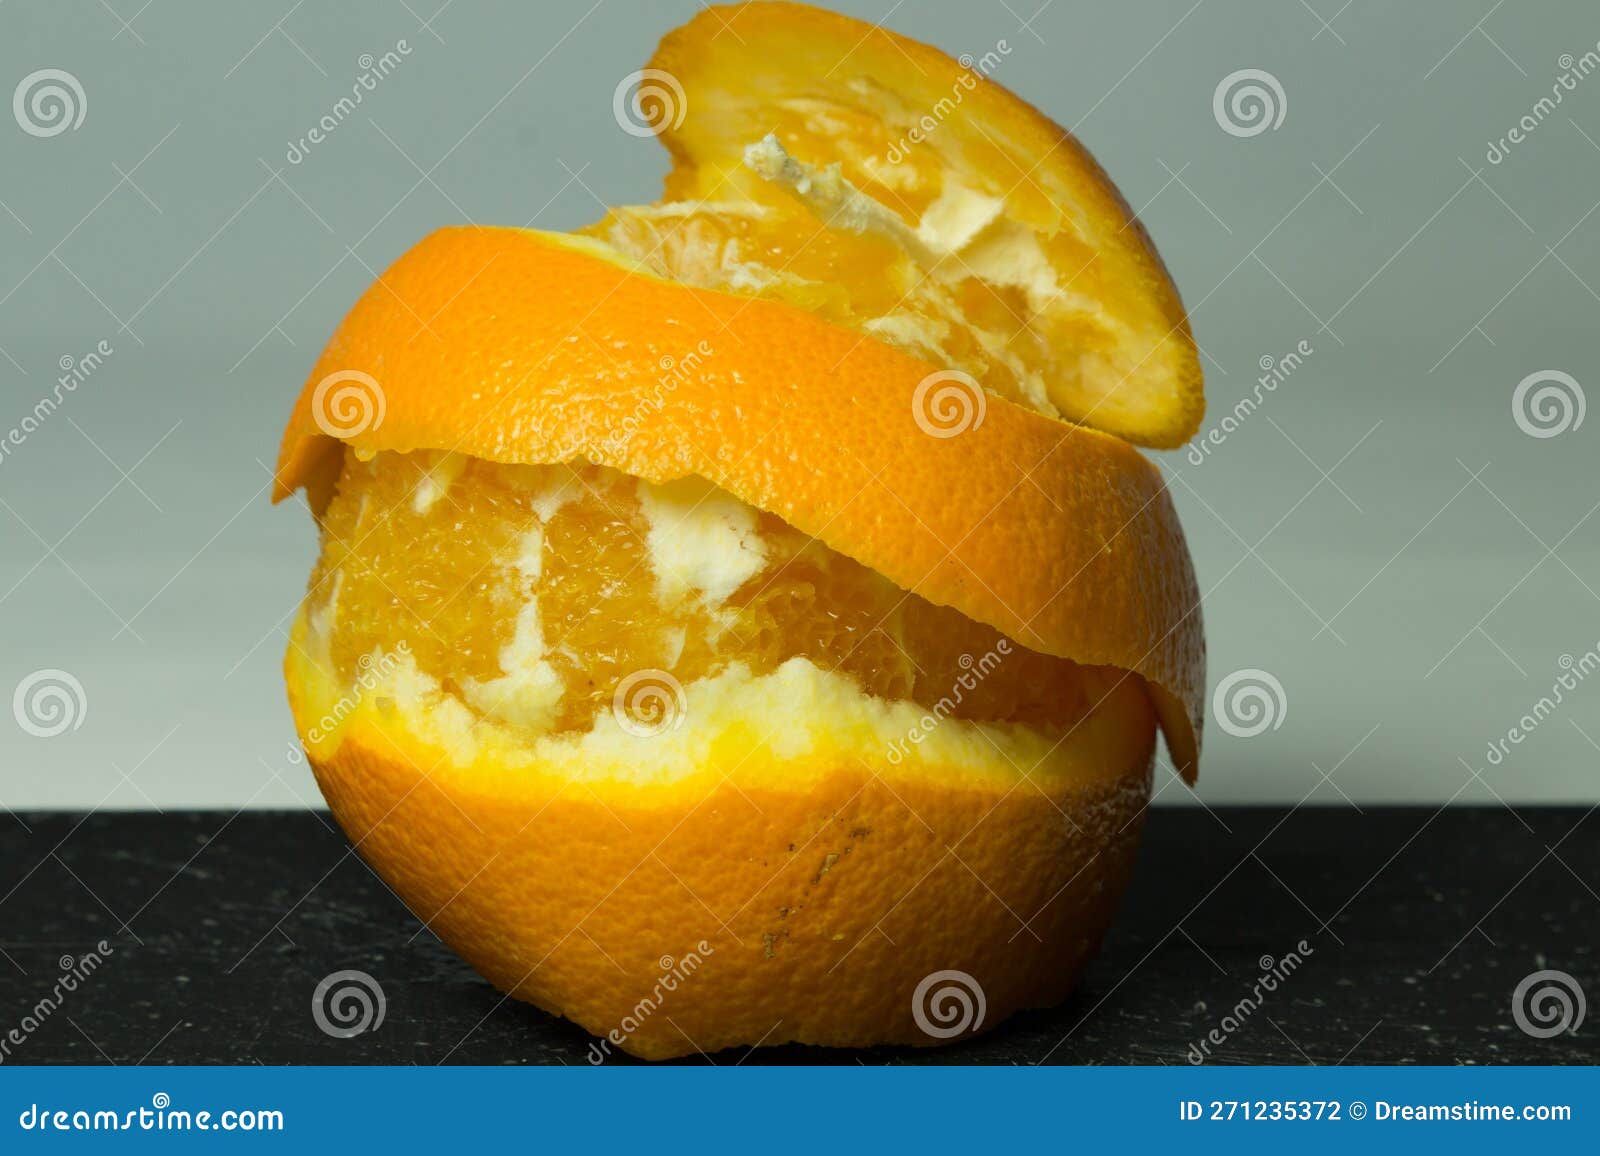 prepared orange